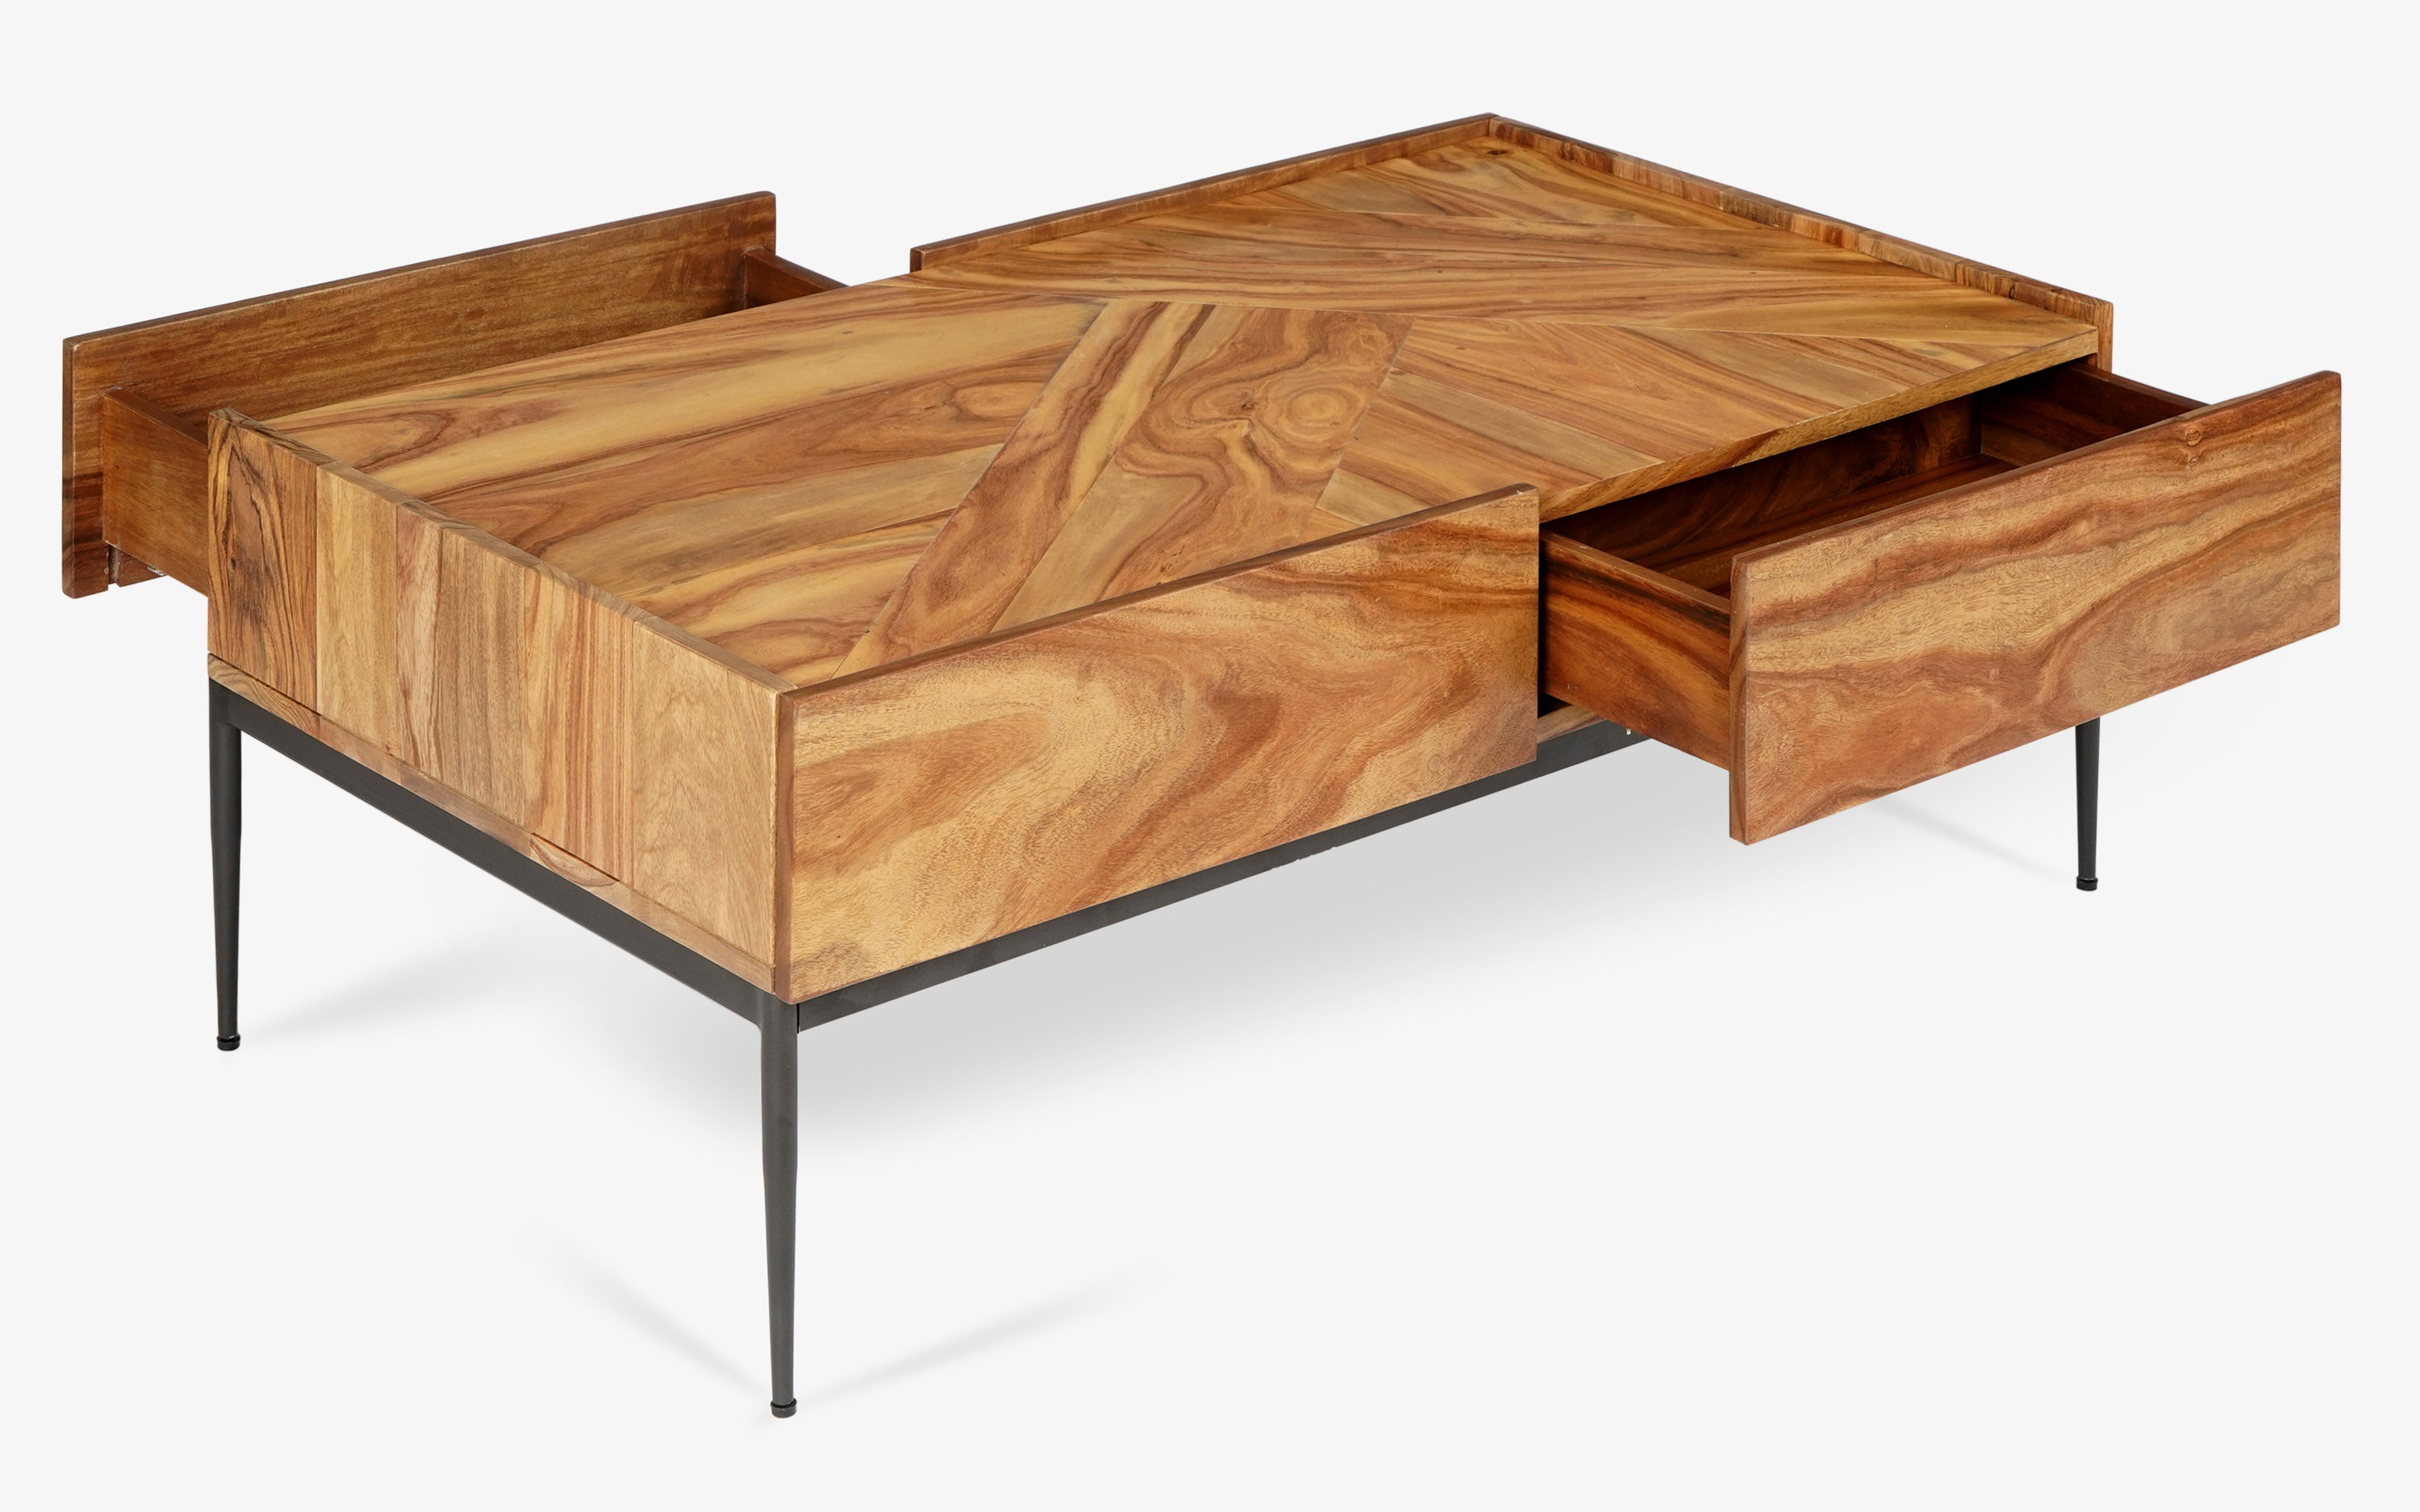 Eco large size rectangular Coffee table with Drawer Storage - Orange Tree Home